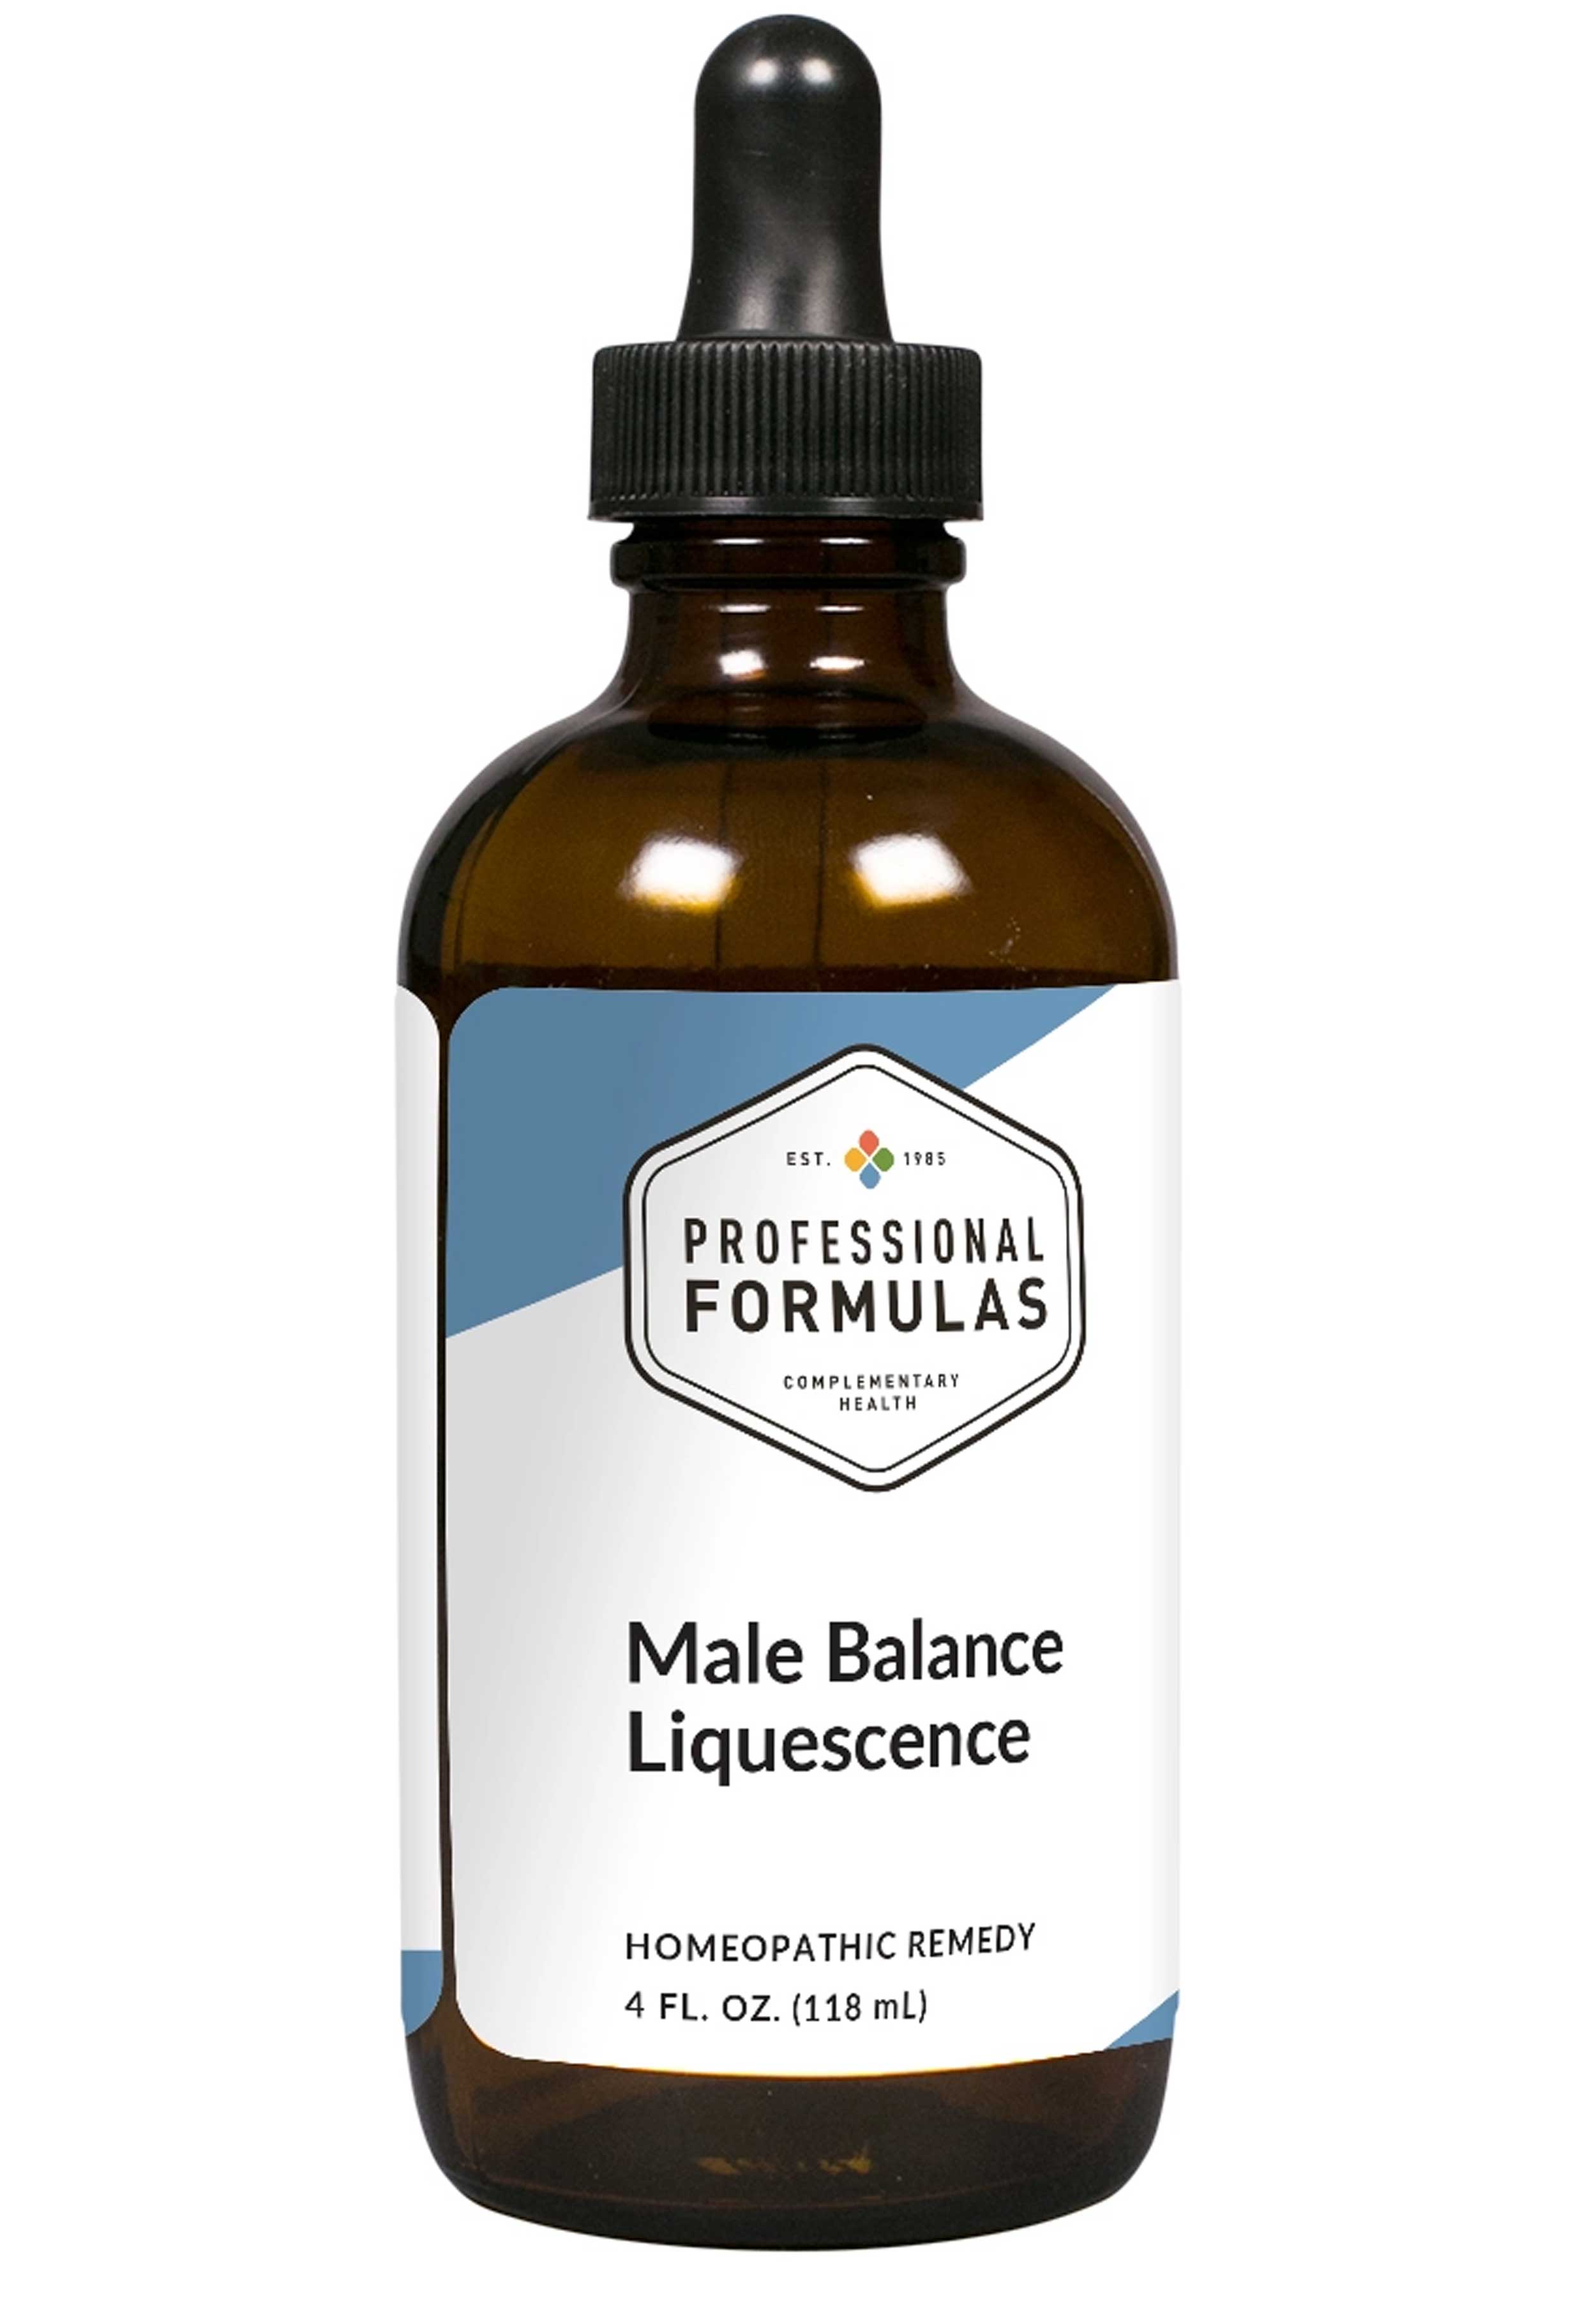 Professional Formulas Male Balance Liquescence